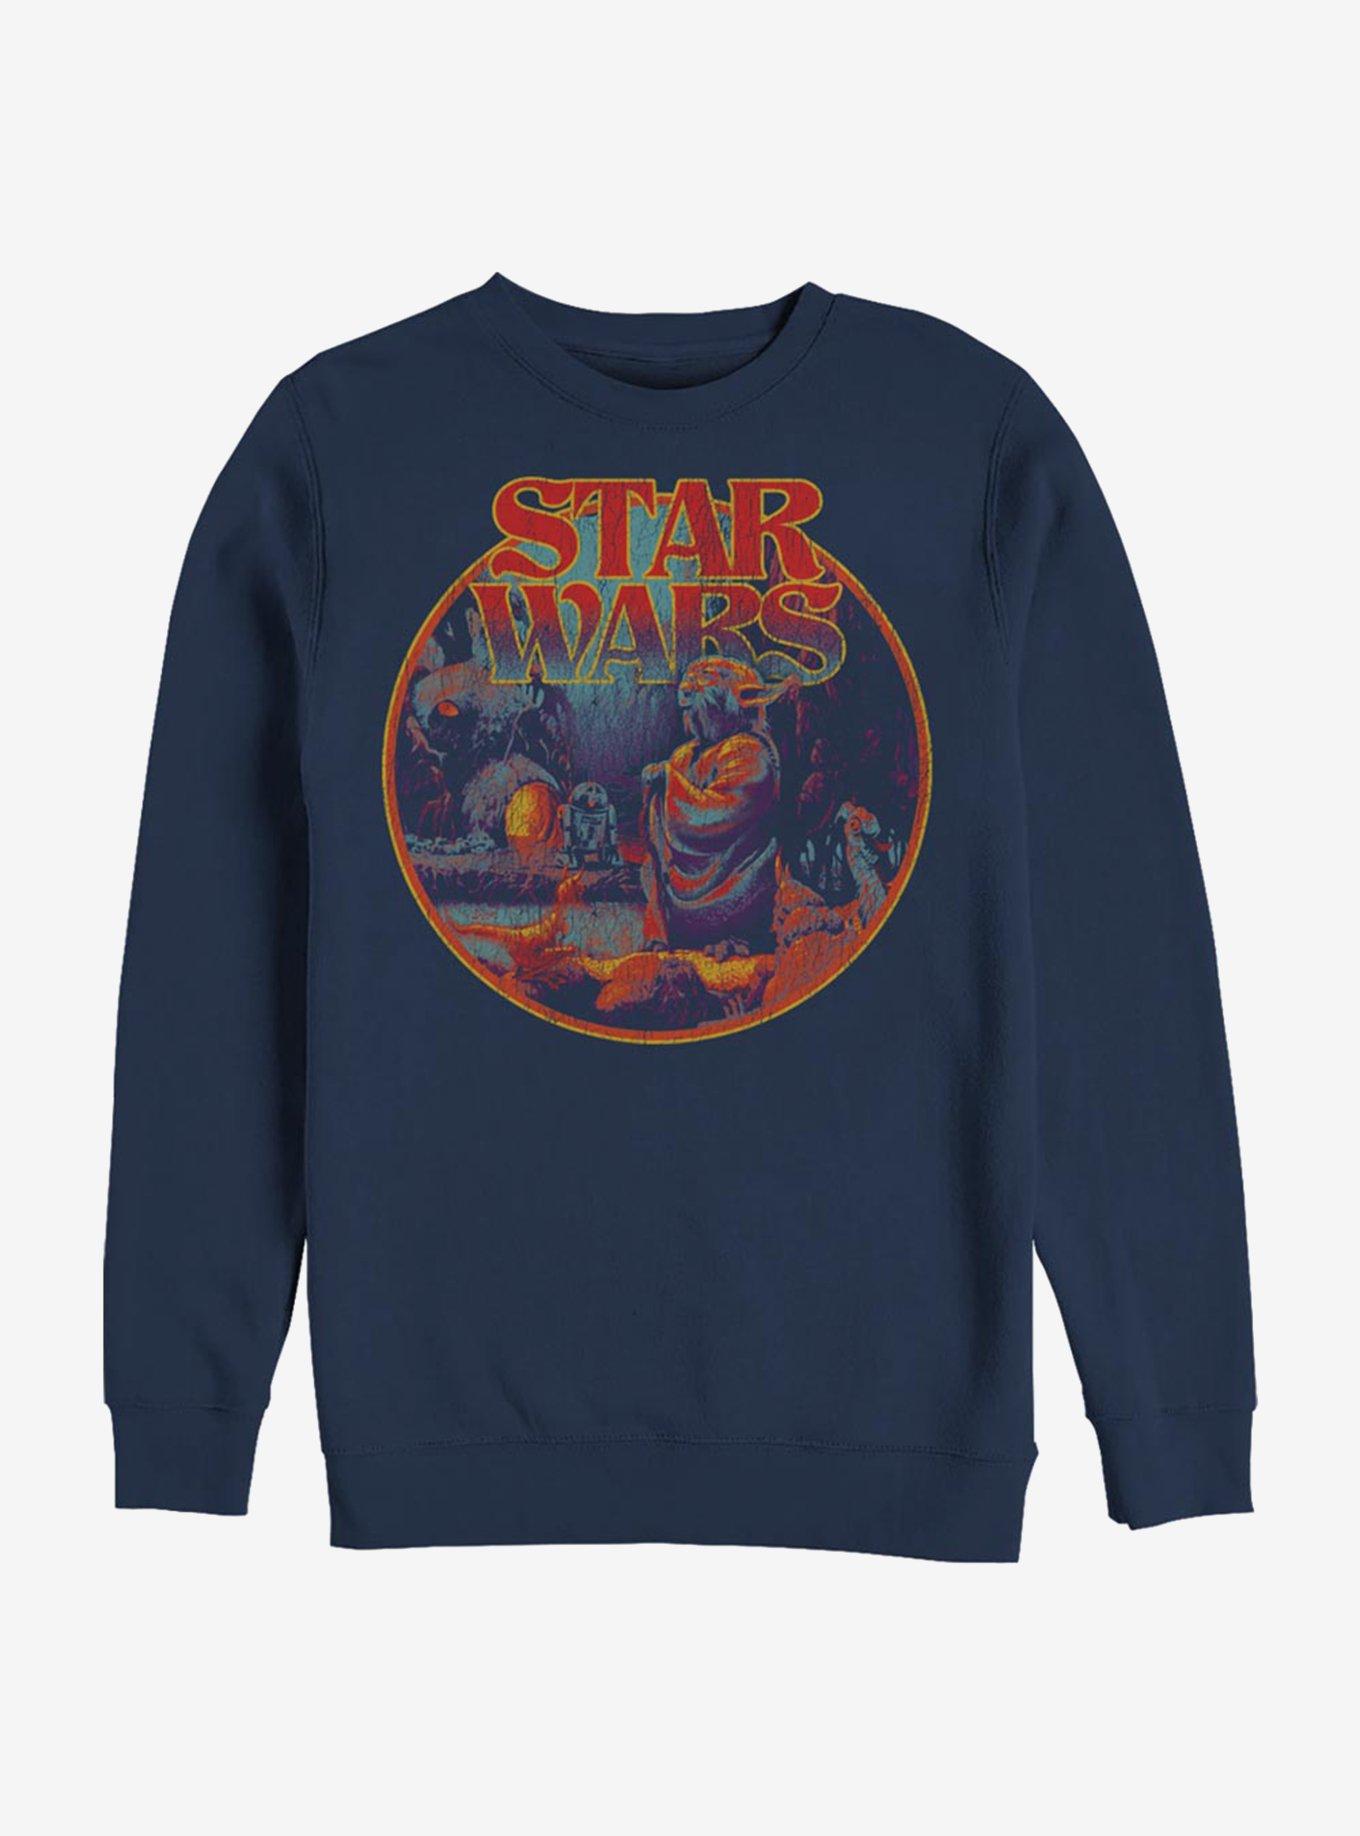 Star Wars Empire Strikes Again Crew Sweatshirt, NAVY, hi-res